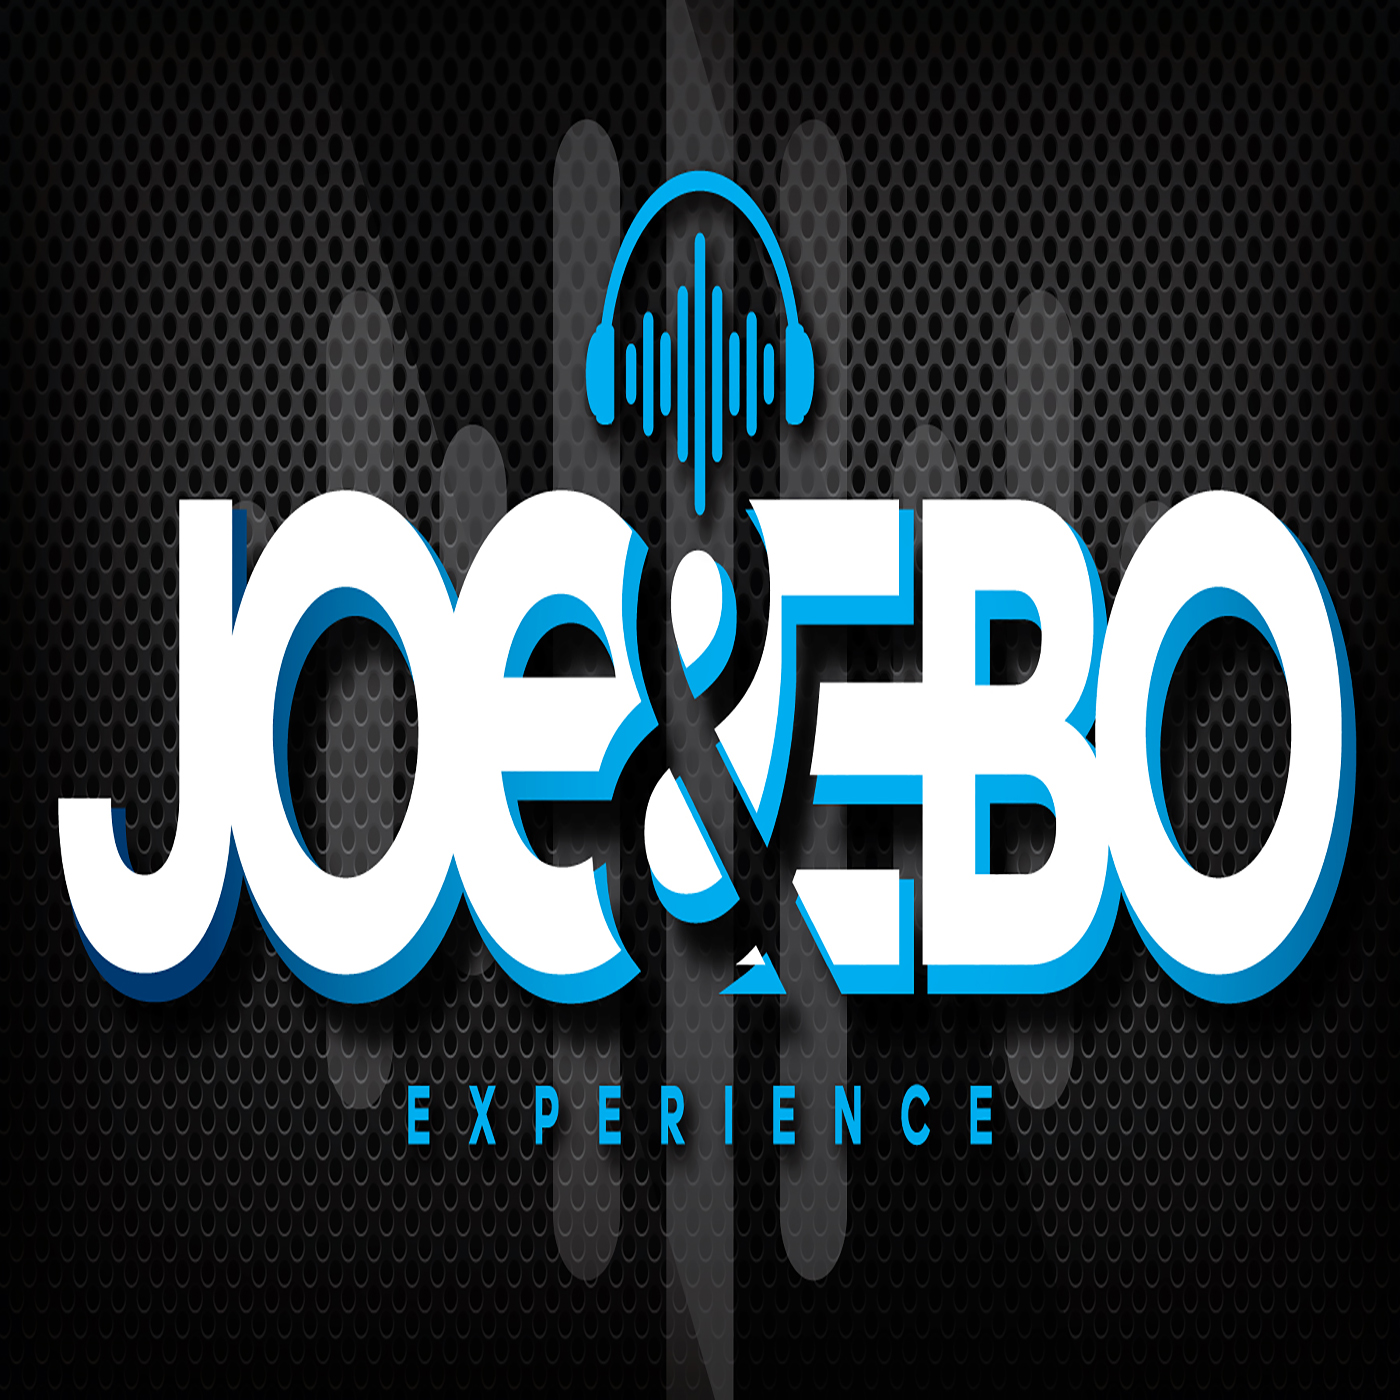 Joe & Ebo Experience: Too Much Winning